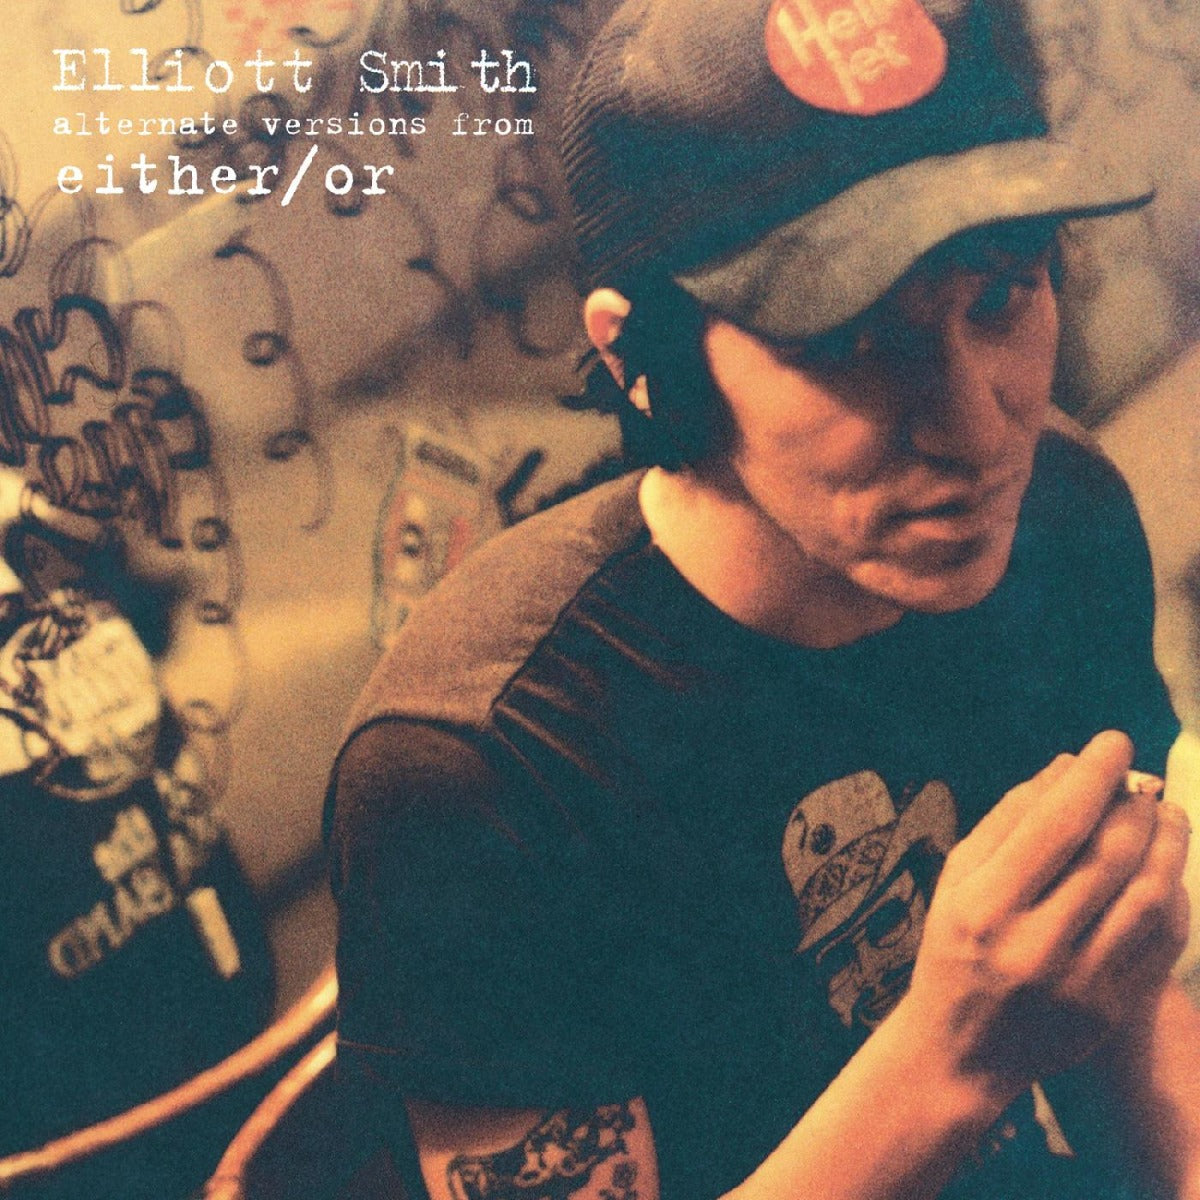 Elliott Smith | Either/Or: Alternative Versions (Limited Edition, White Vinyl) (7" Single) | Vinyl